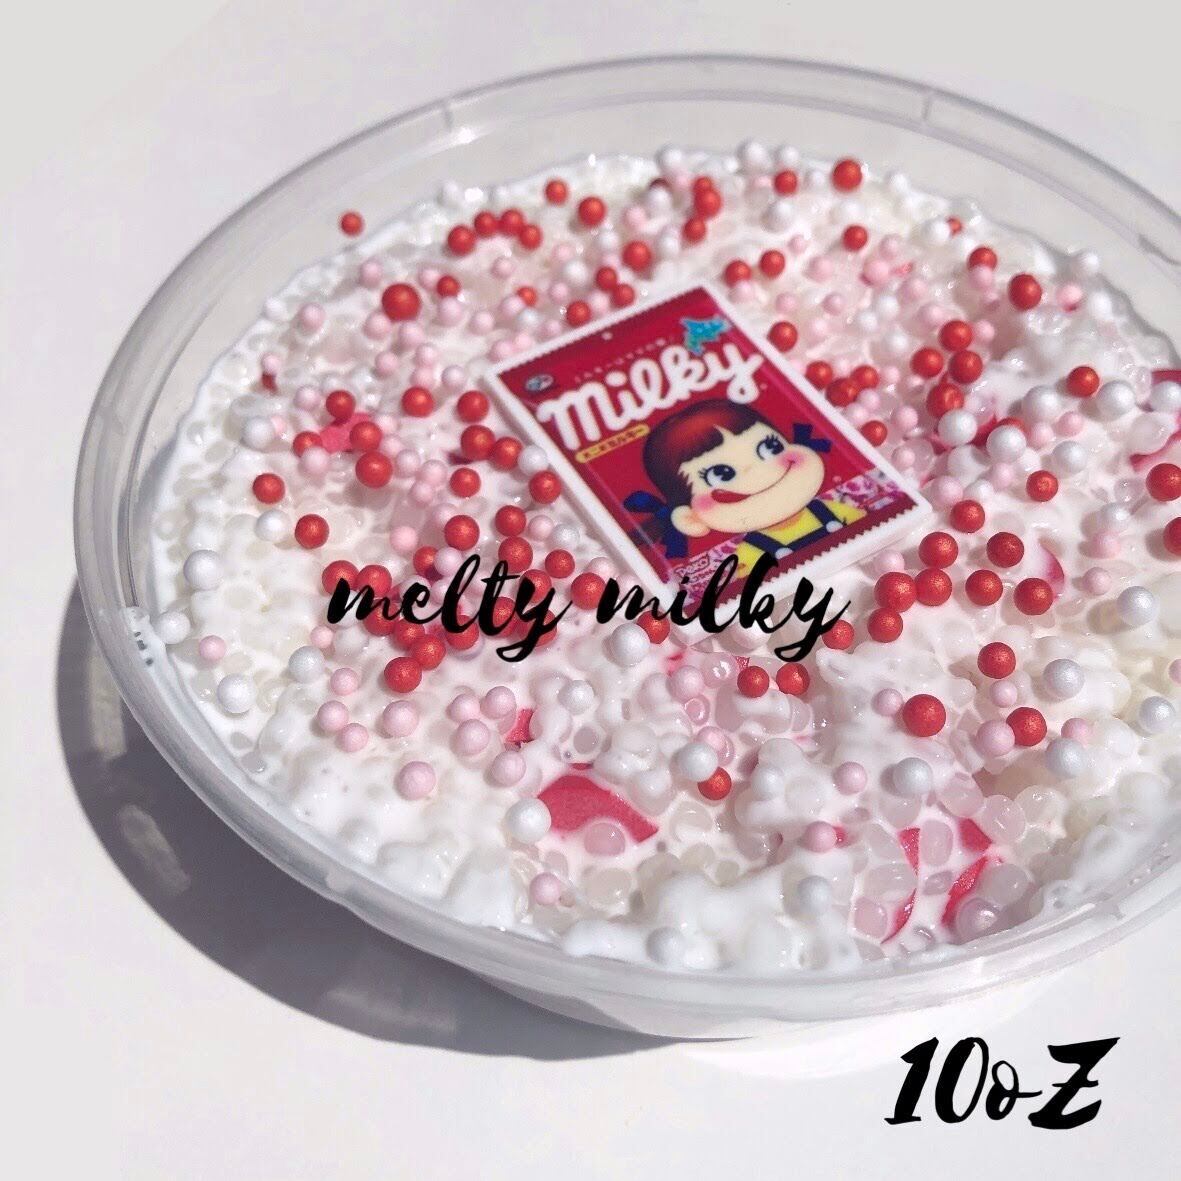 melty milky / メルティーミルキー / slime / スライム | KIKI slime shop